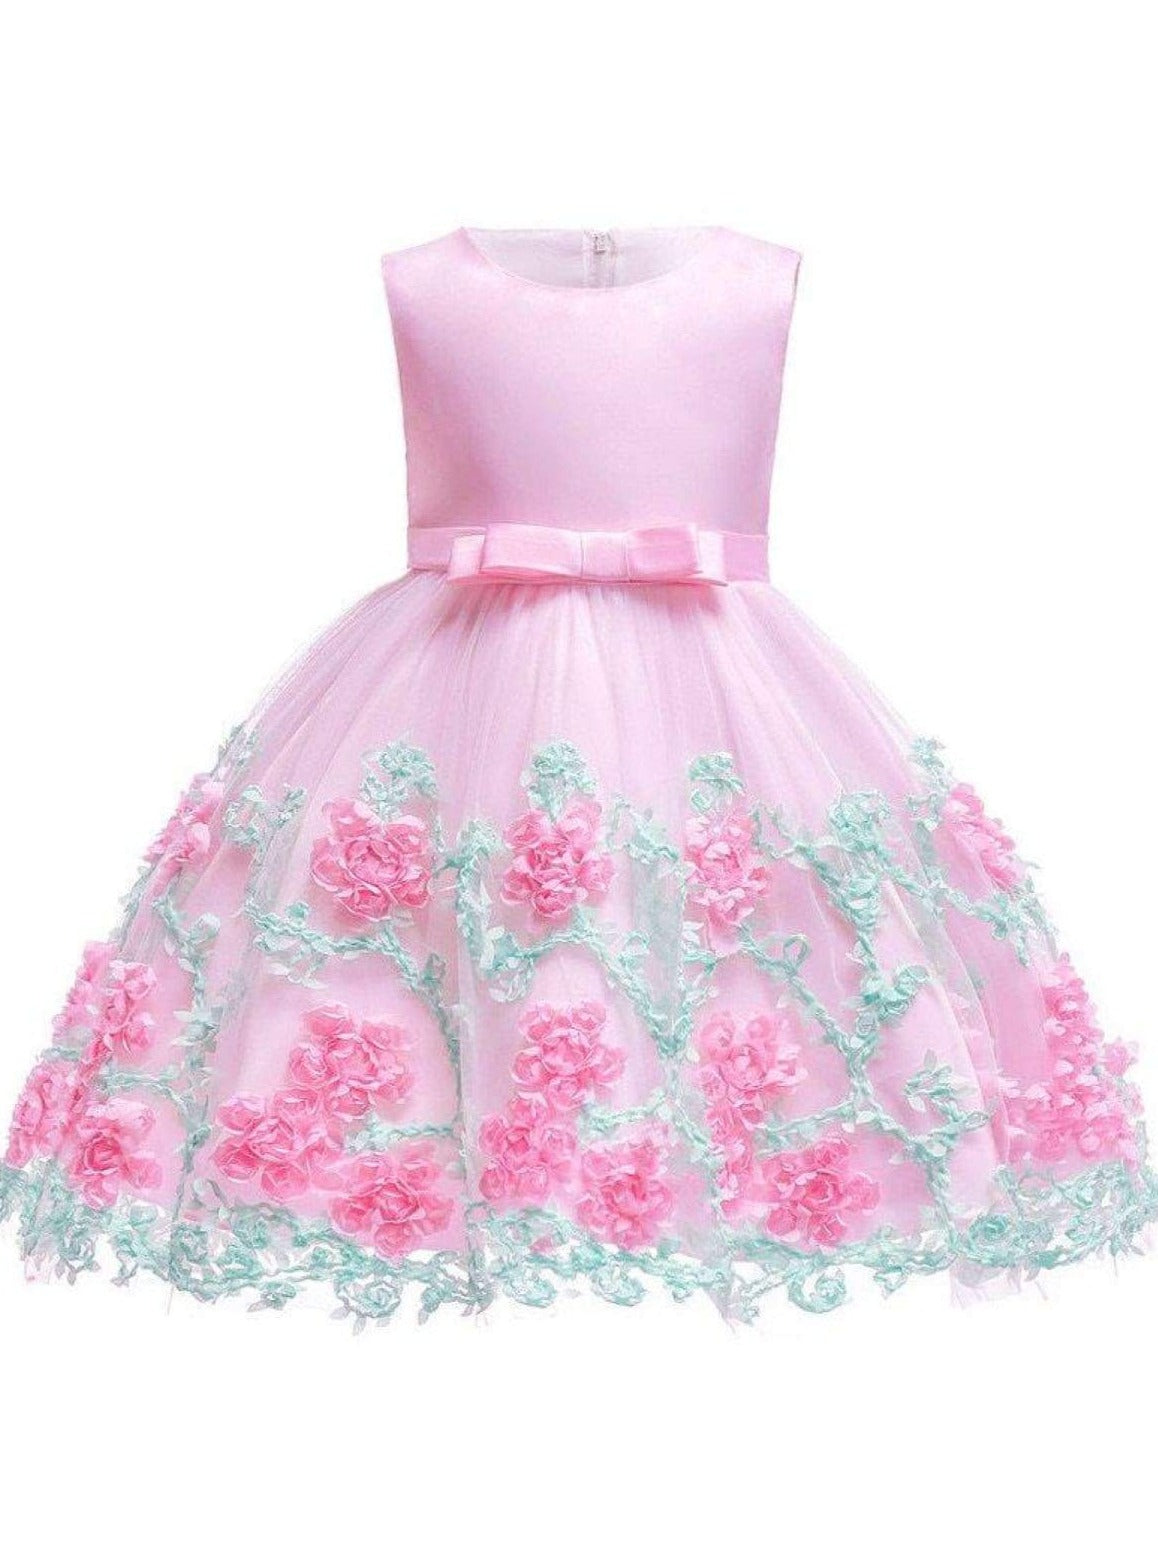 Cute Toddler Dresses | Girls Garden Buttercup Floral Tulle Party Dress